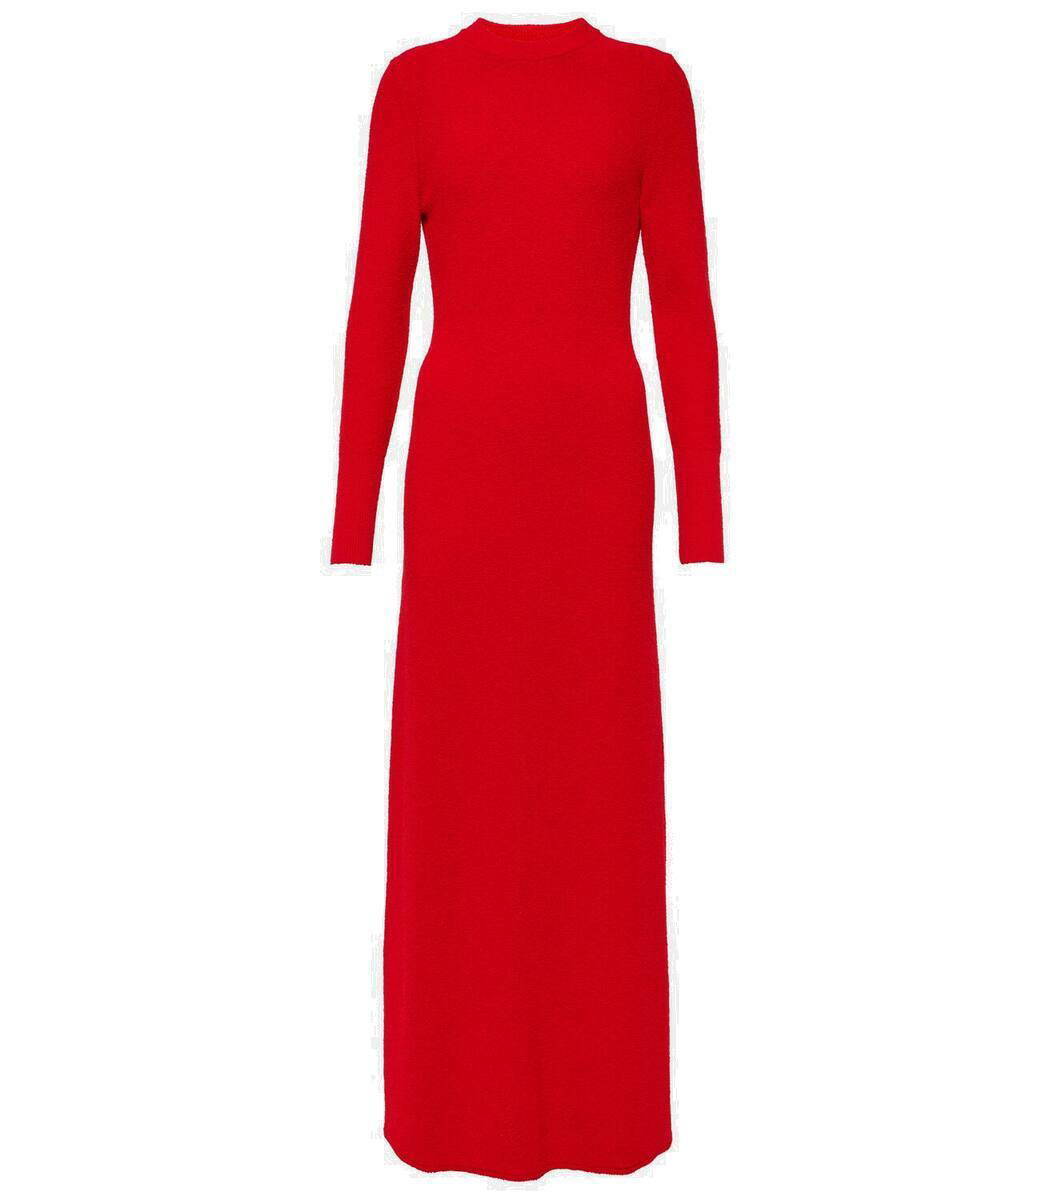 Sinead Gorey - Red Digital Print Curve Enhancing Maxi Dress